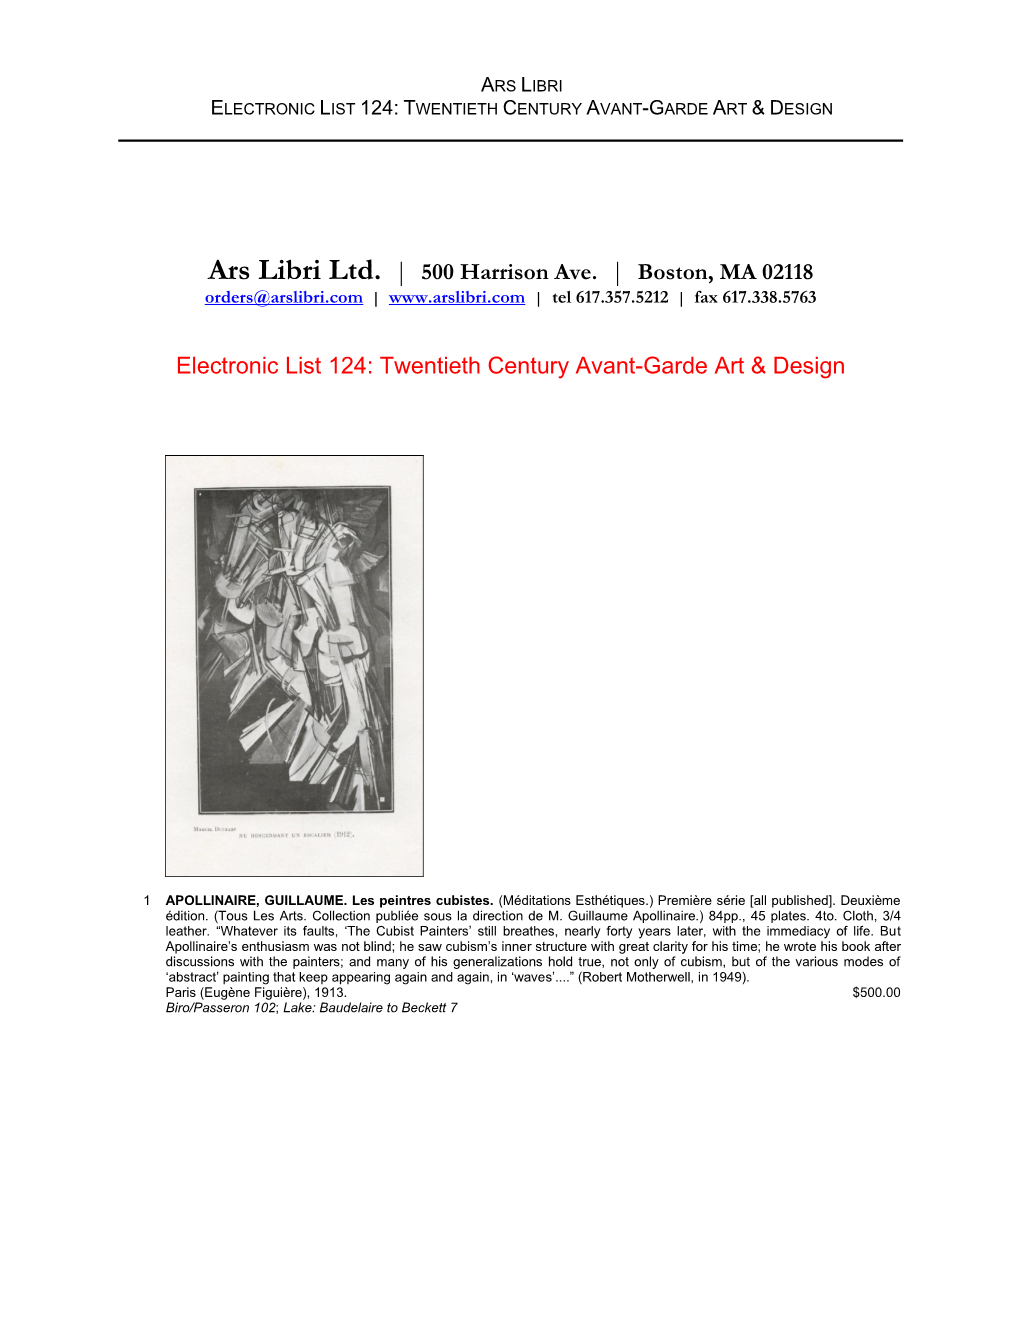 Boston, MA 02118 Electronic List 124: Twentieth Century Avant-Garde Art